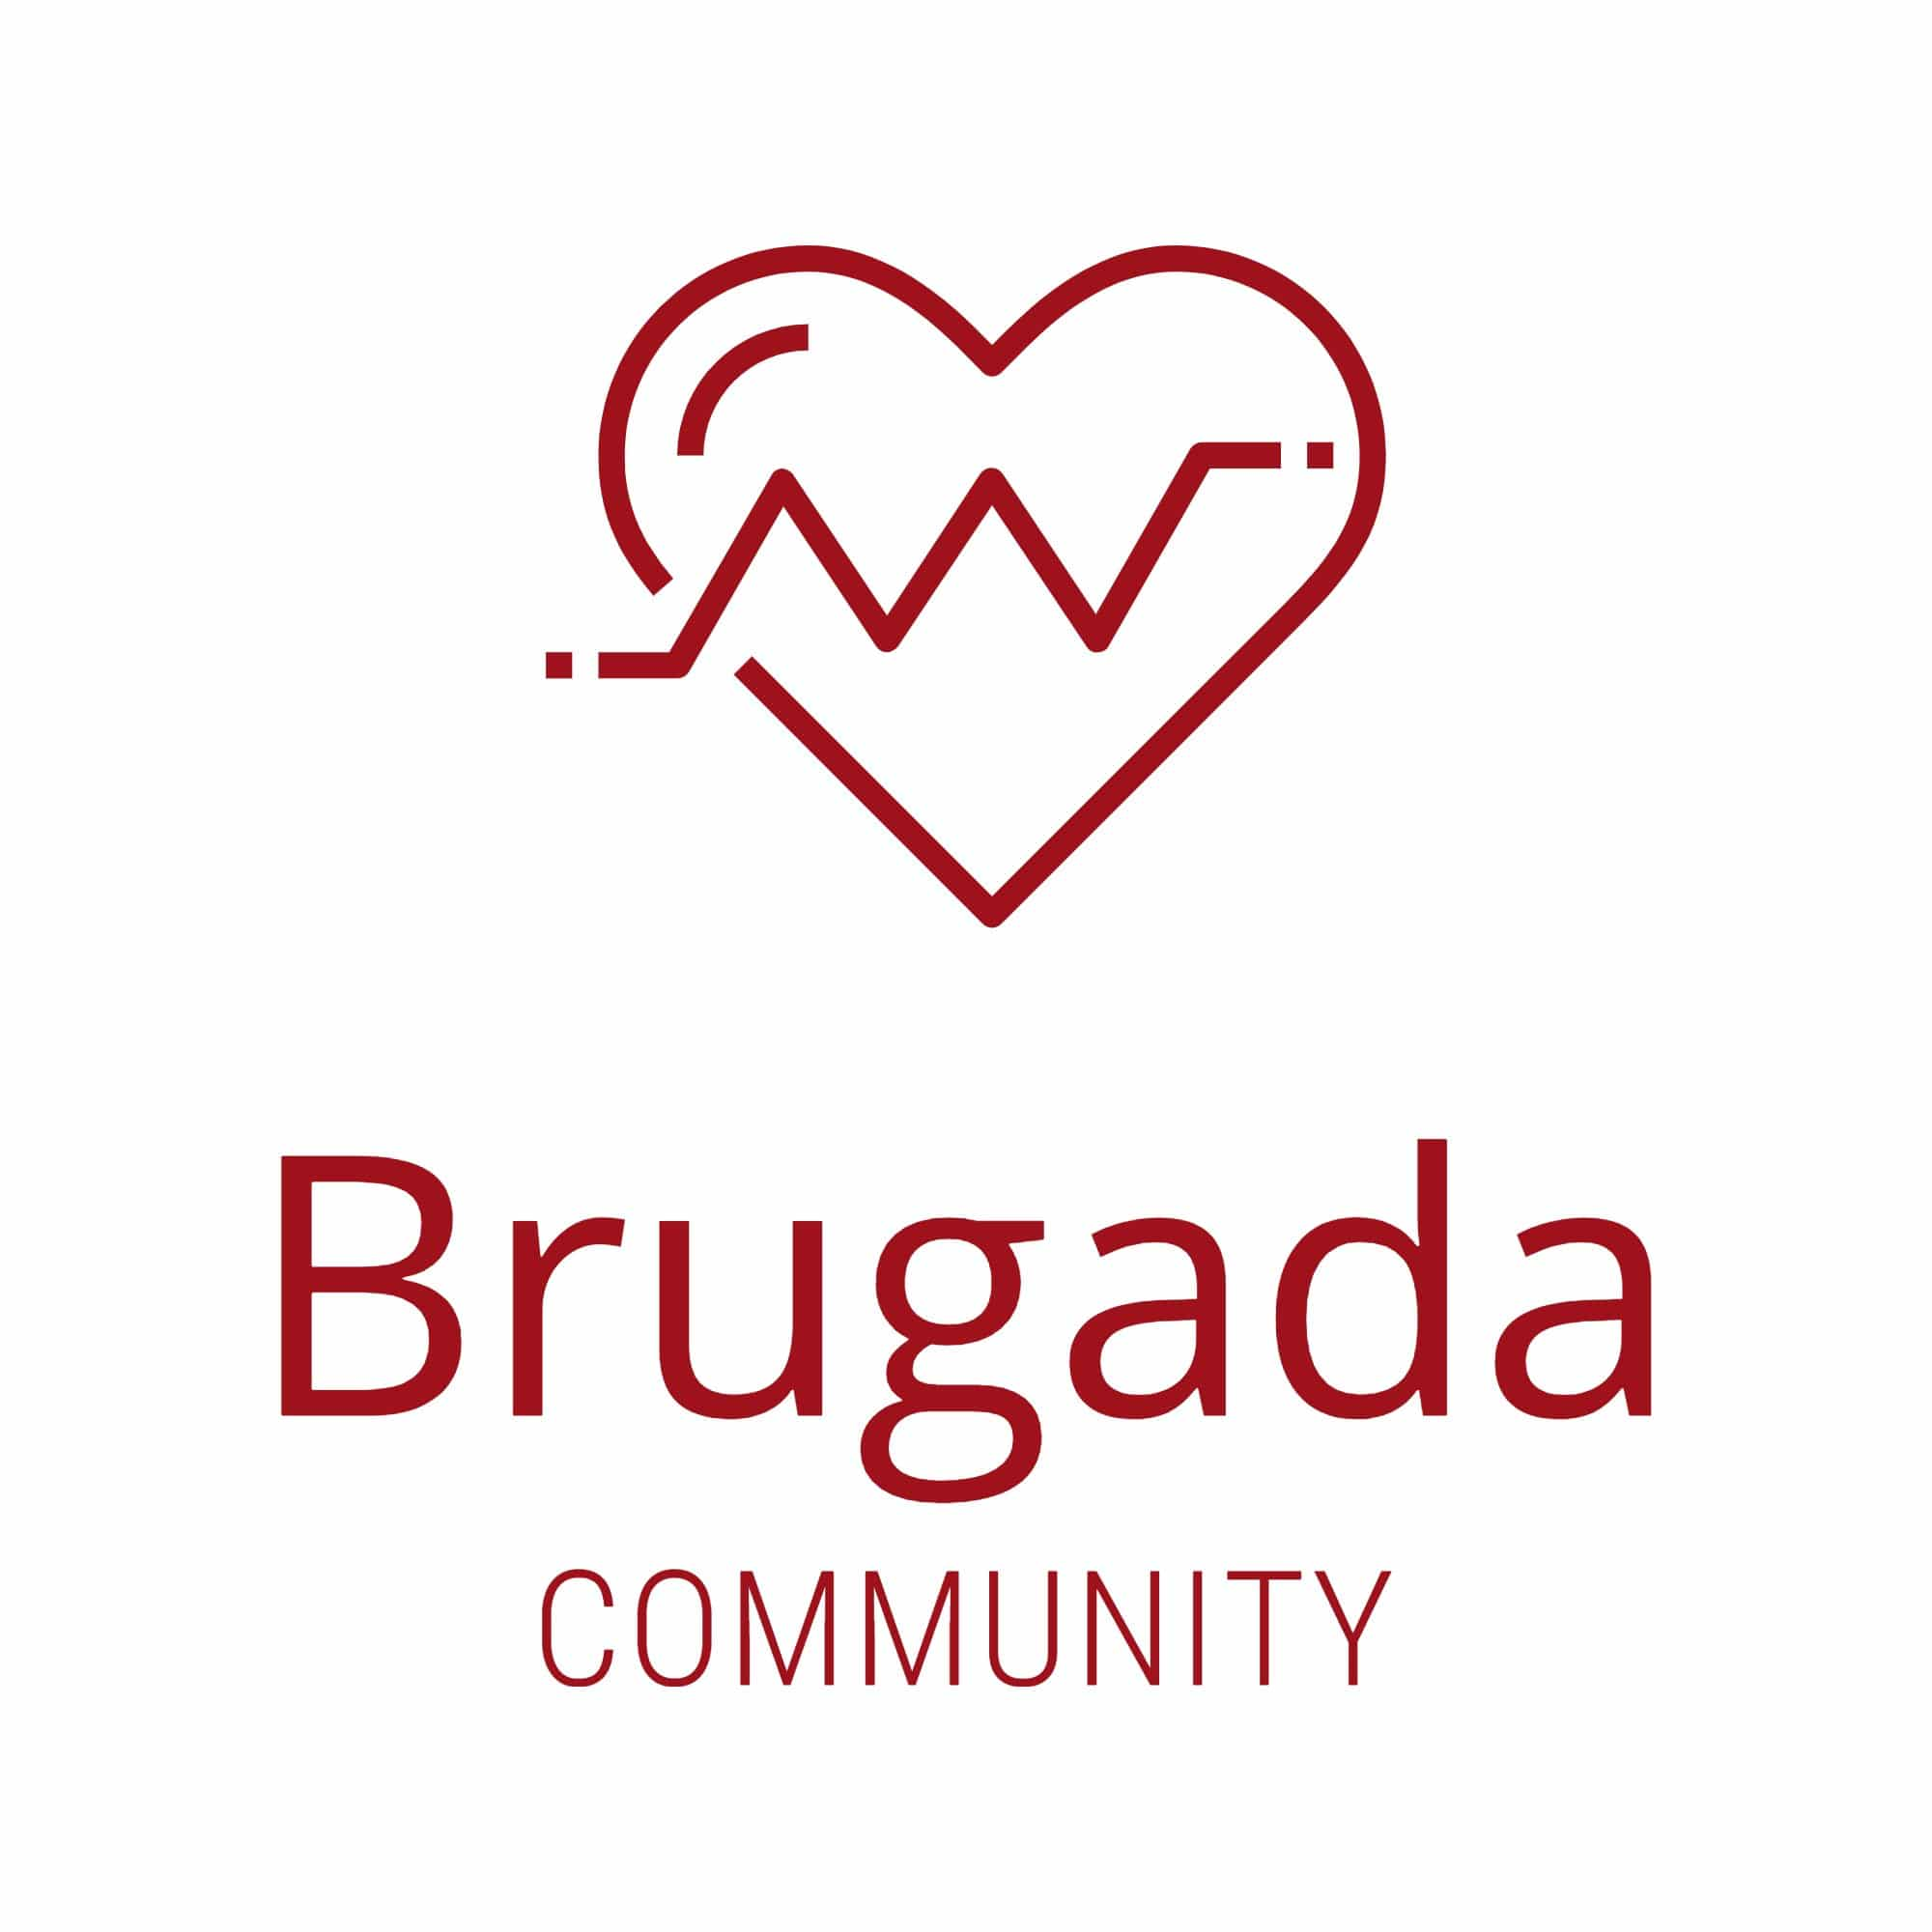 Brugada Community logo